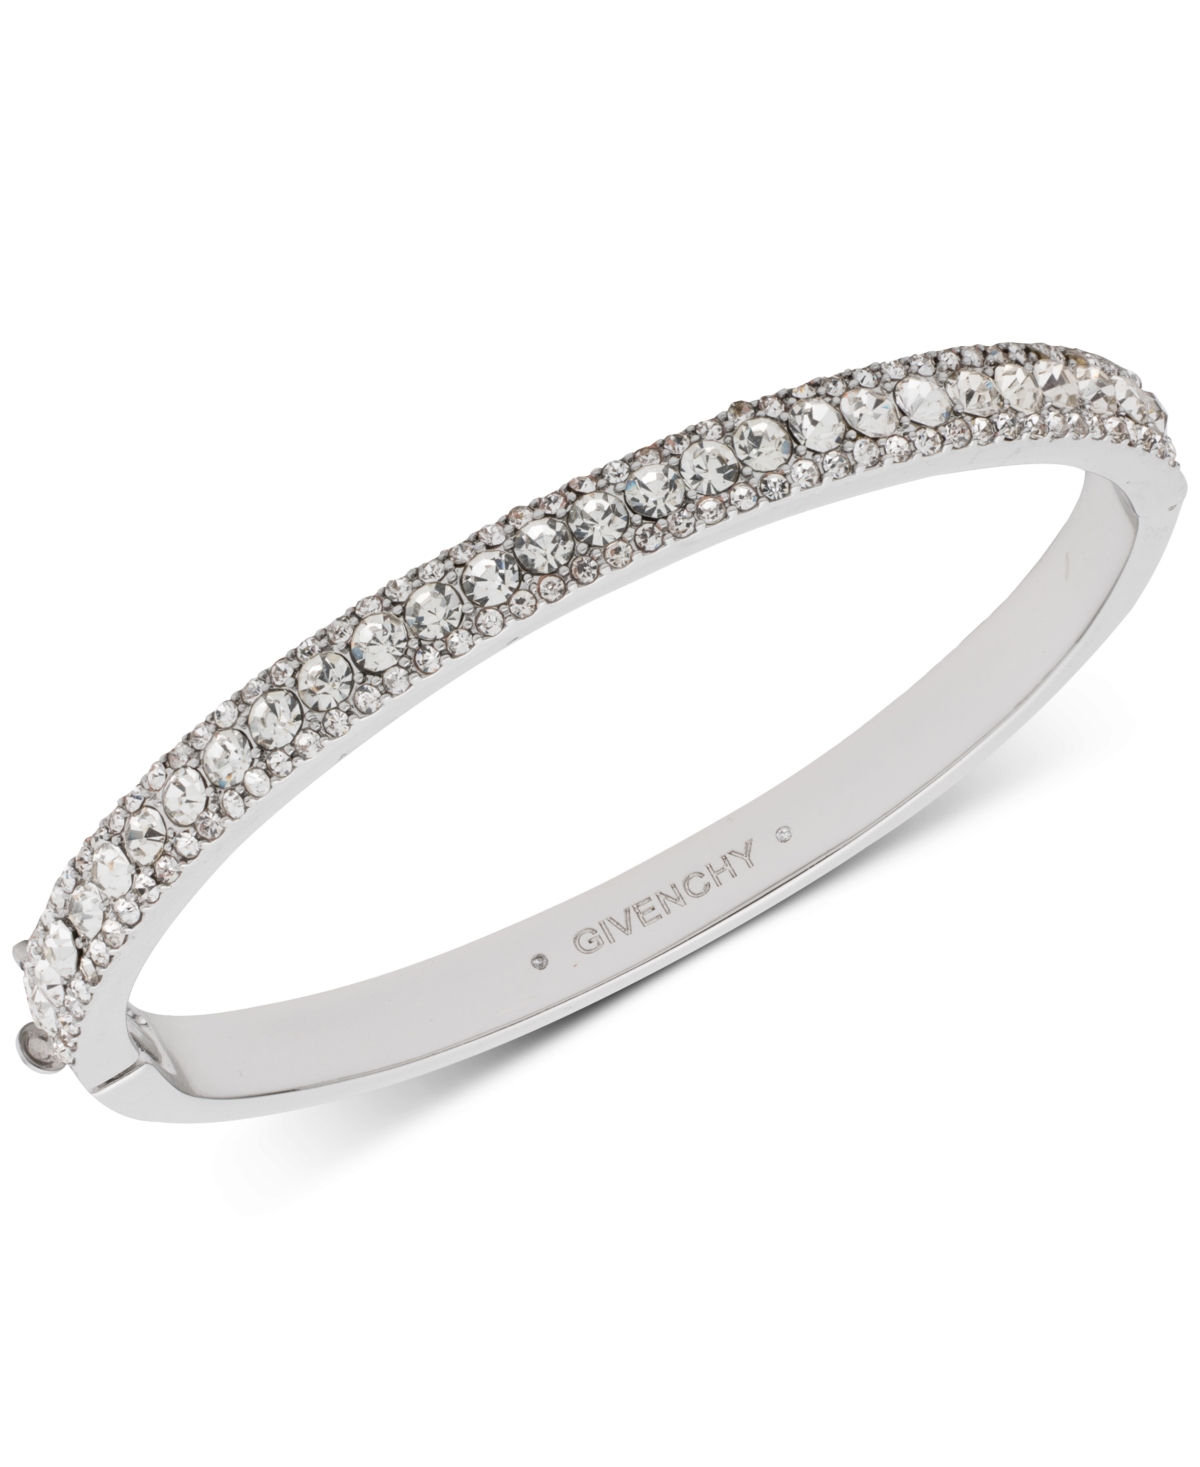 Crystal Bangle Bracelet - Silver